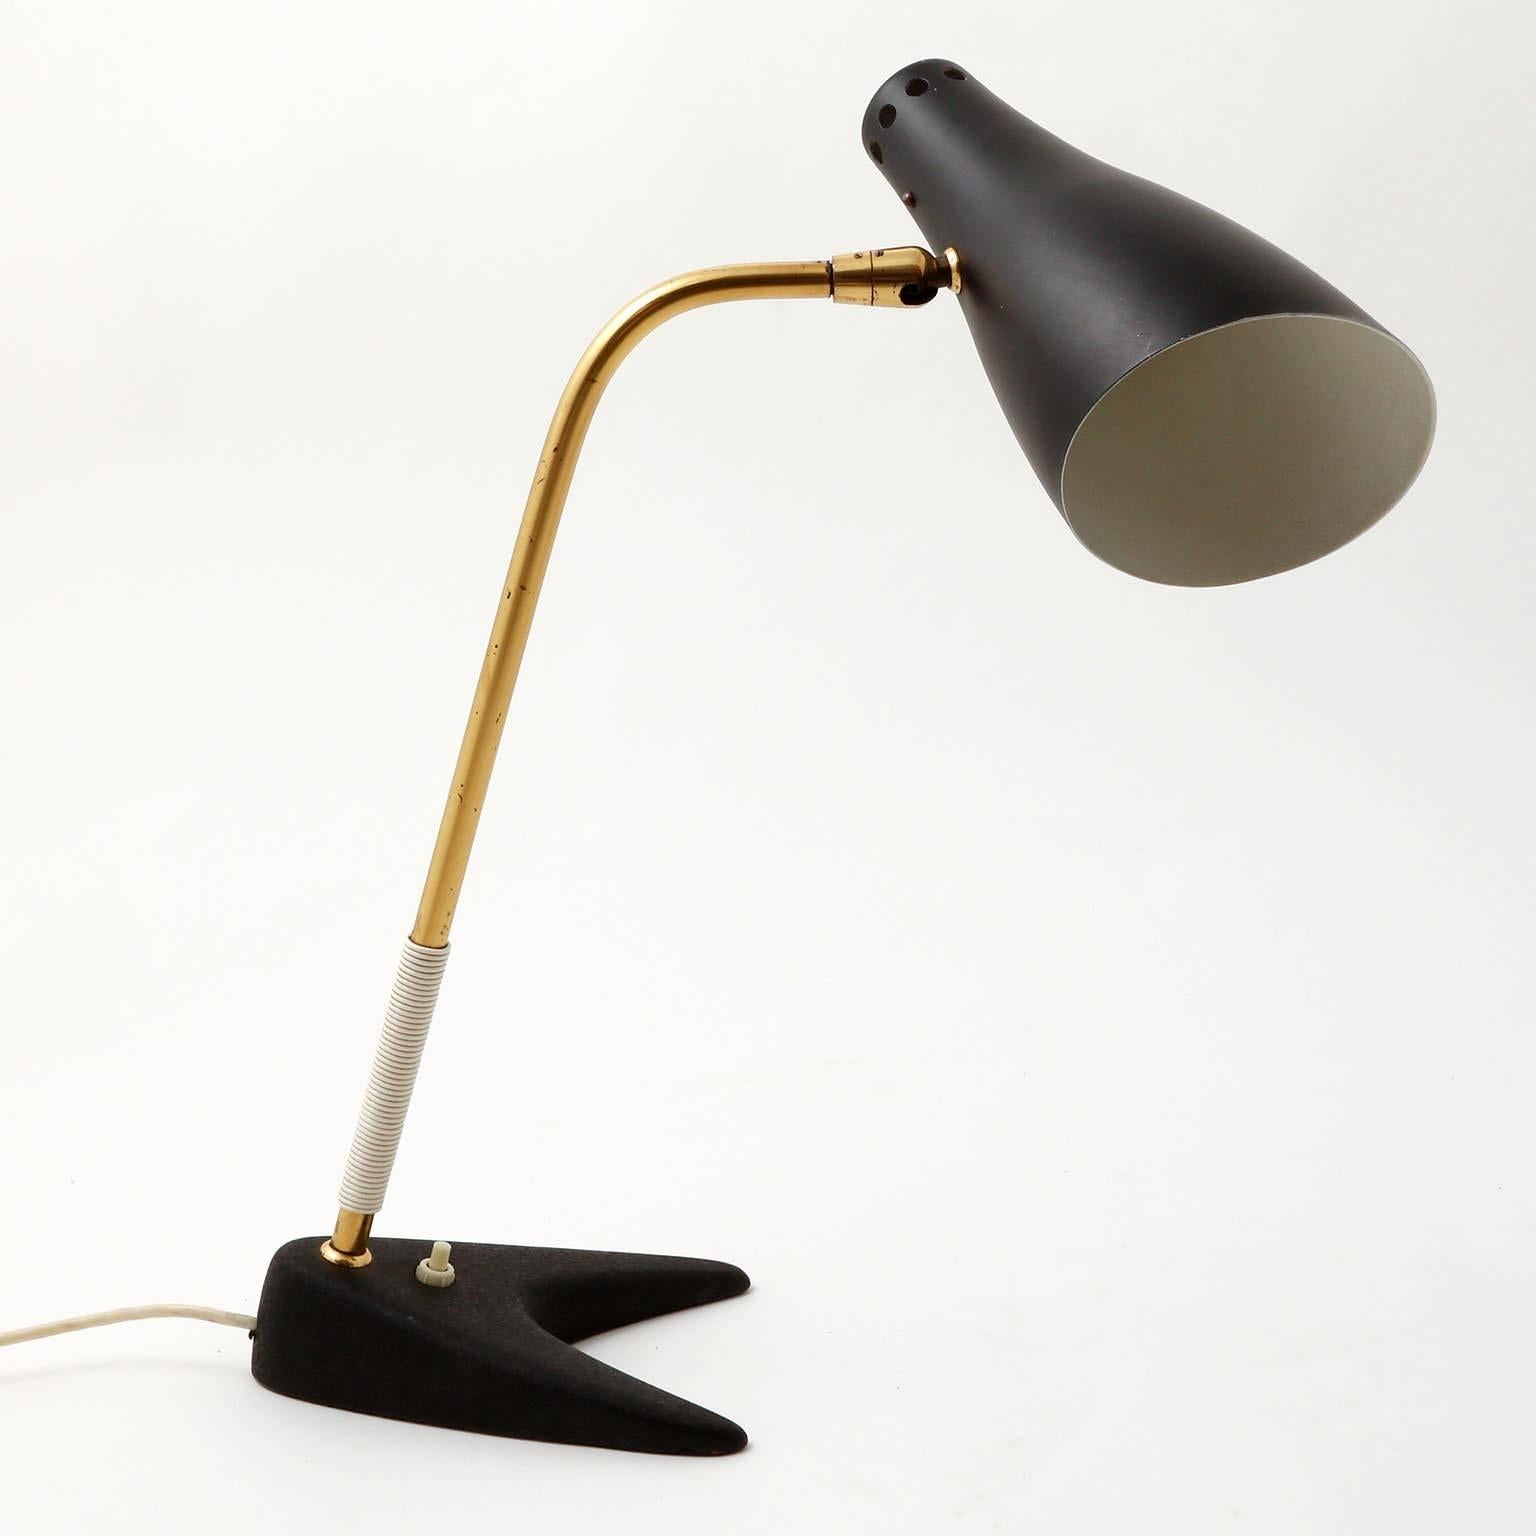 Painted Kalmar Table Lamp 'Stilfix' No. 1257 Swivel Top, Brass Cast Iron, 1960